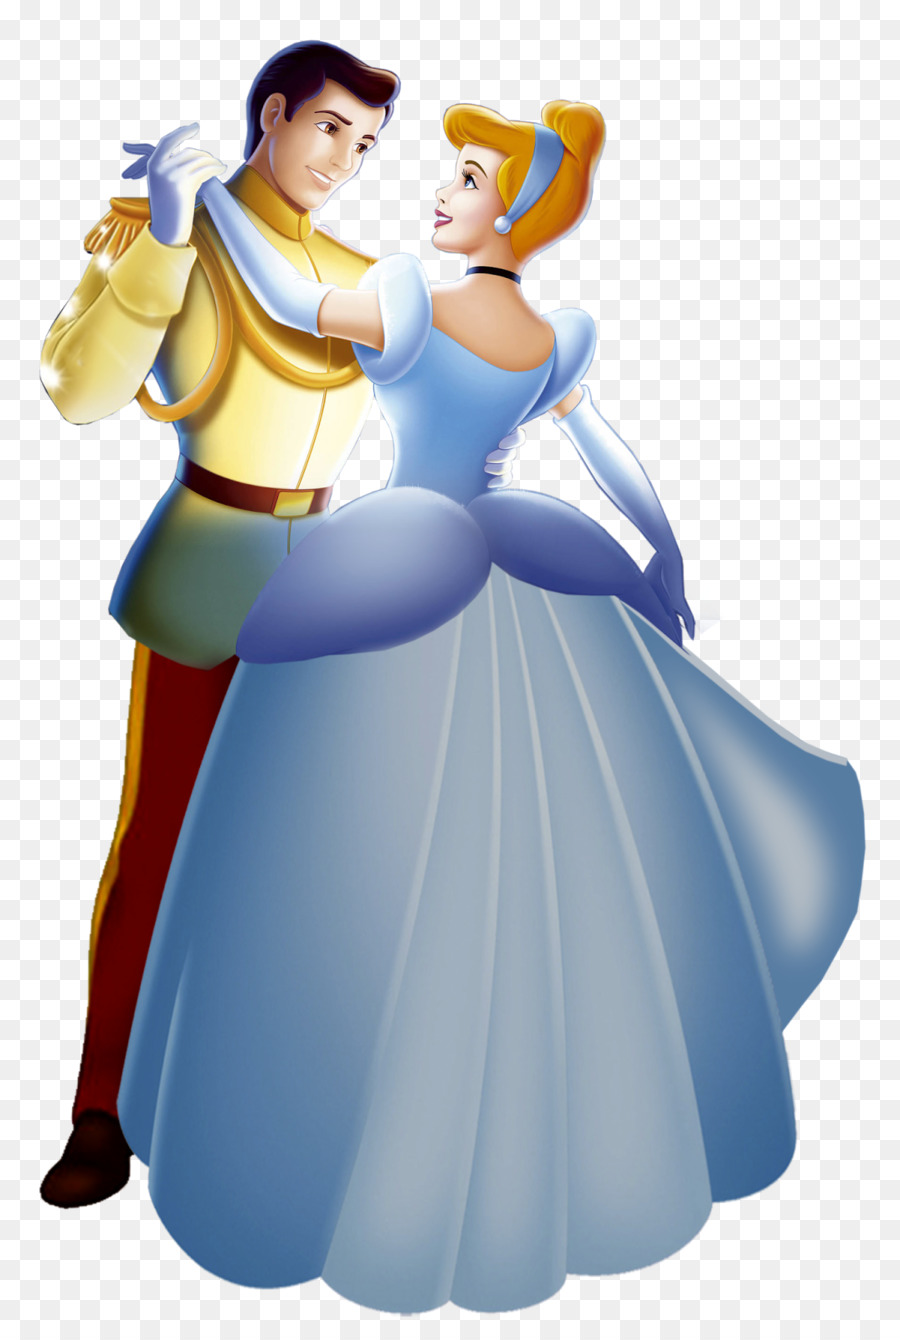 Cinderella Prince Charming The Walt Disney Company Clip art - Cinderella png download - 1075*1600 - Free Transparent Cinderella png Download.